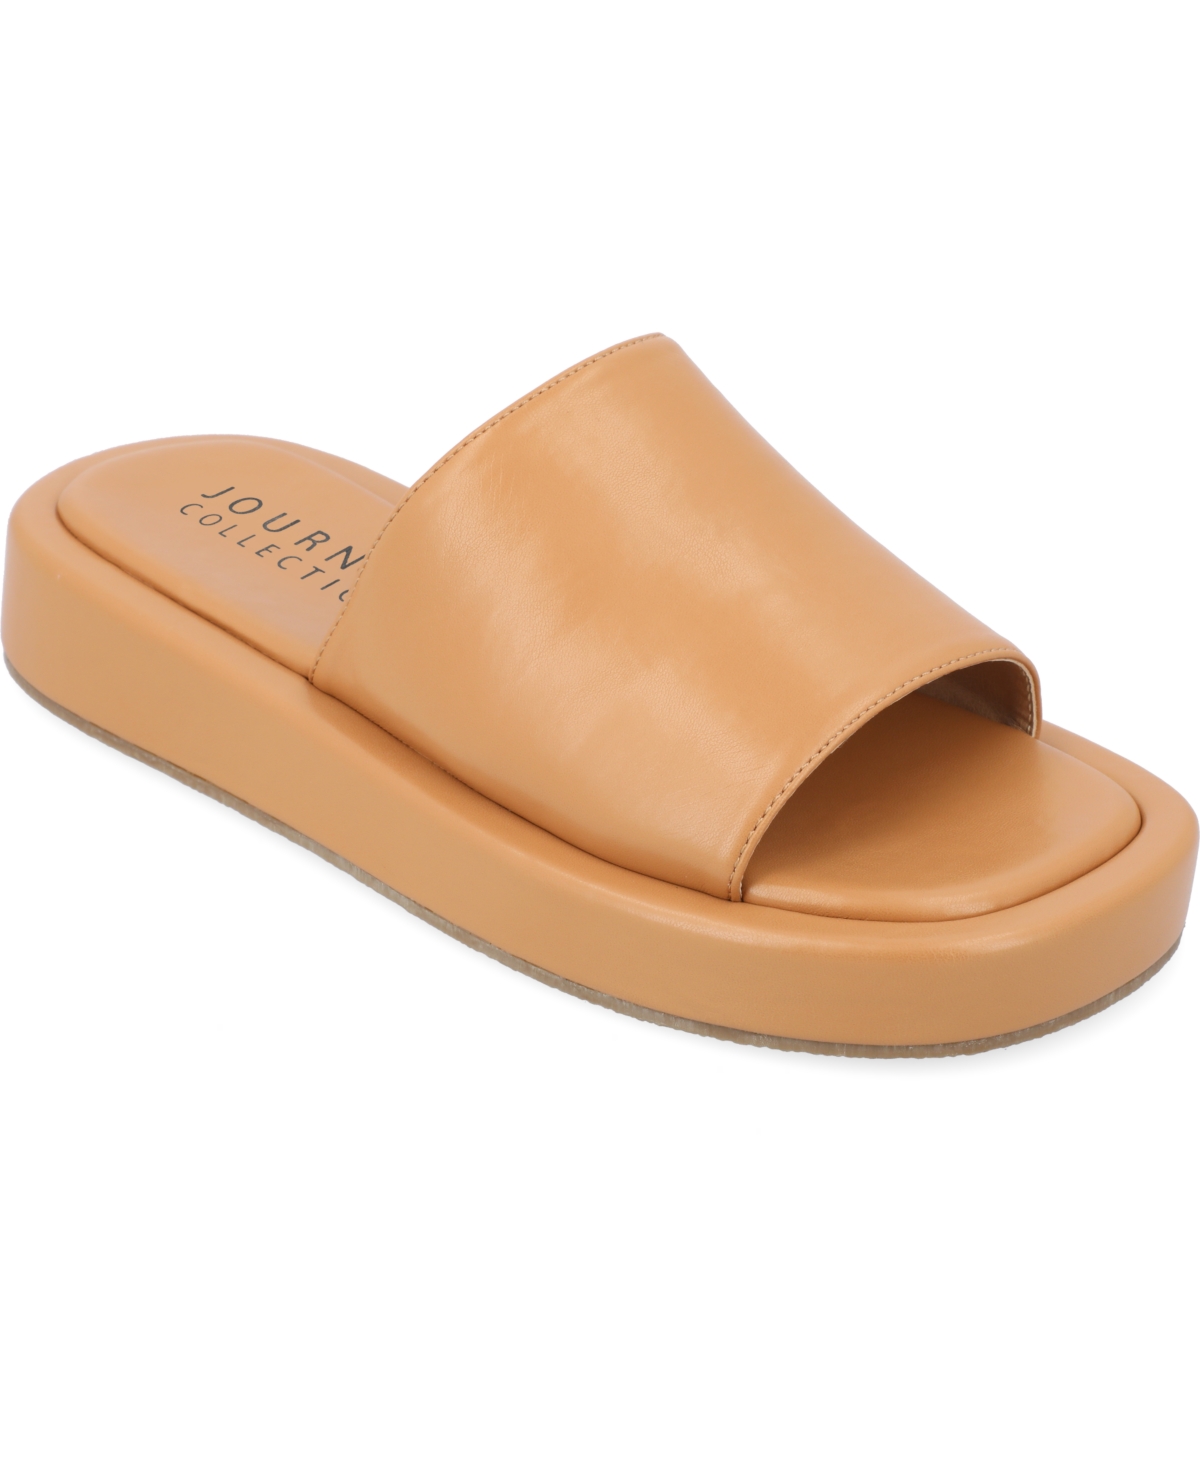 Women's Denrie Platform Slip-On Sandals - Tan